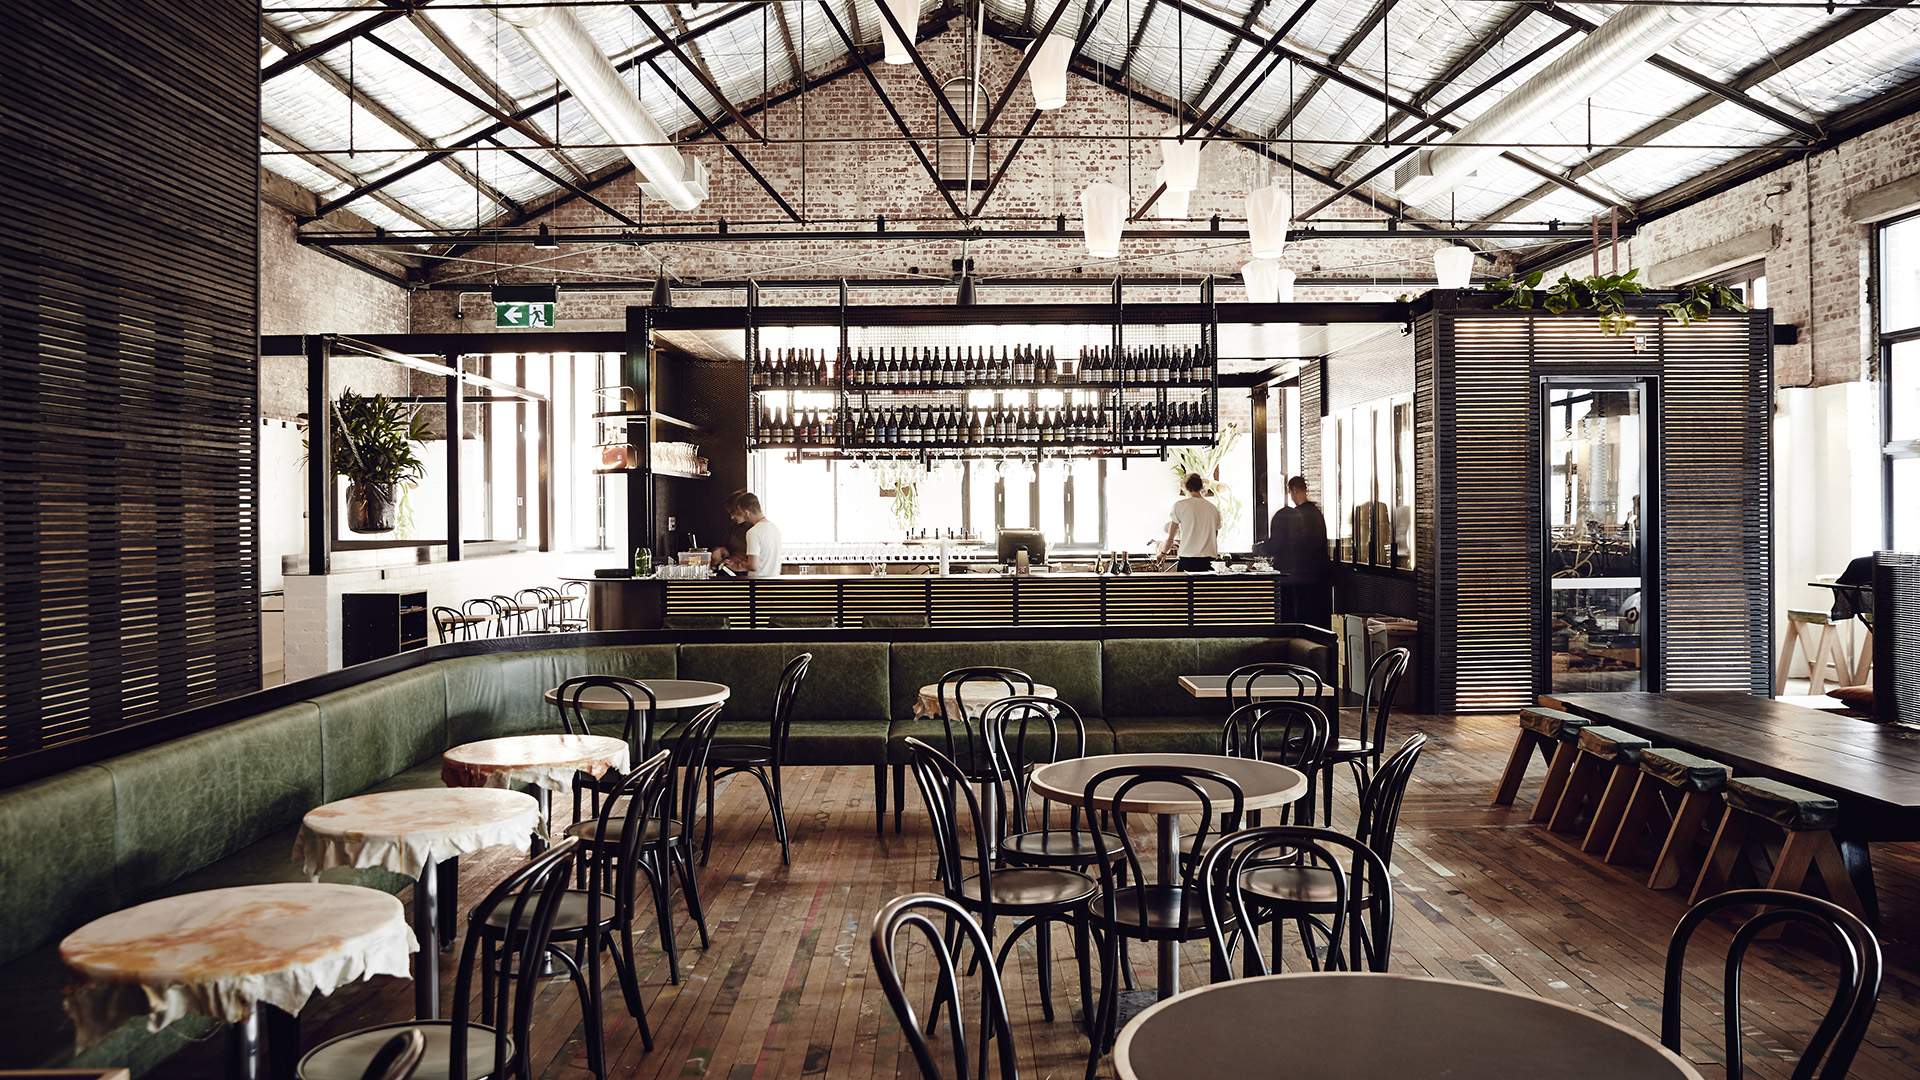 A Look Inside Longsong, Longrain's New Upstairs Bar and Eatery